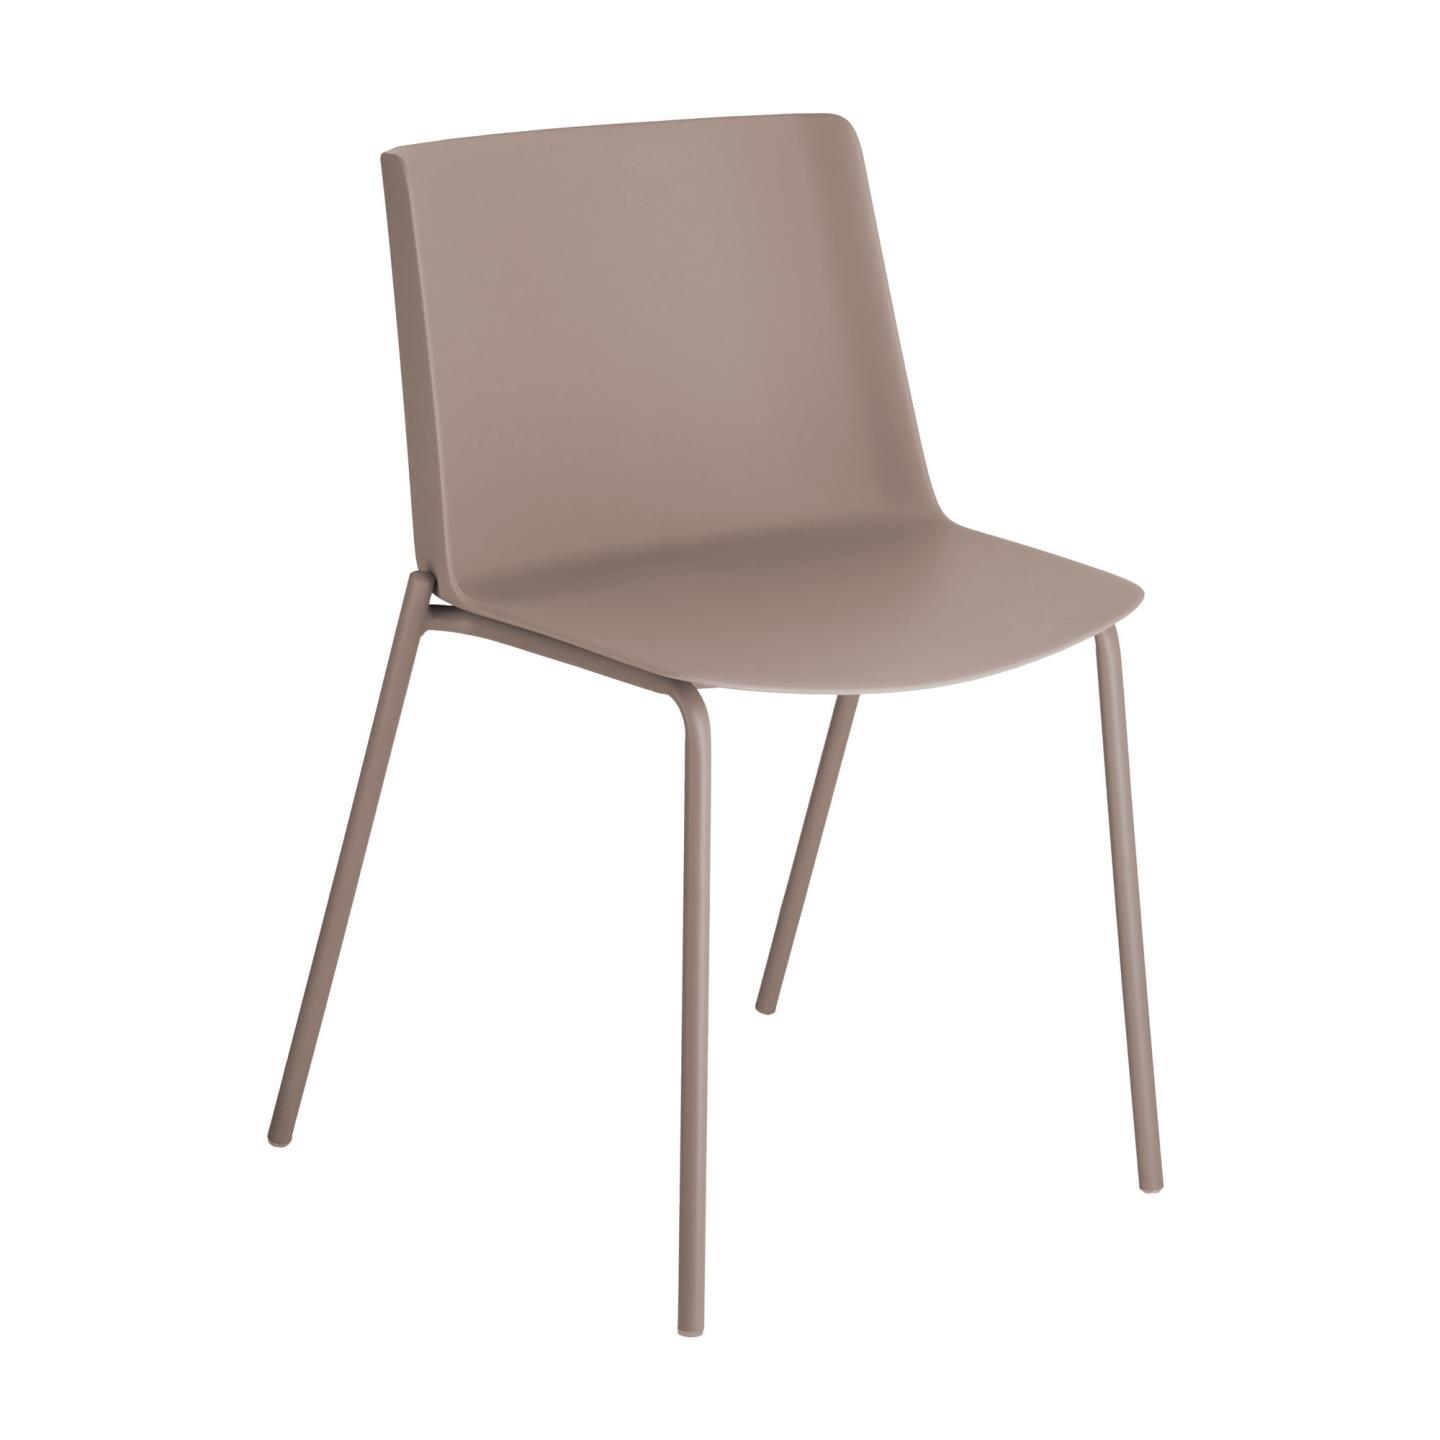 LAFORMA Hannia spisebordsstol - brun polypropylen og brun stål